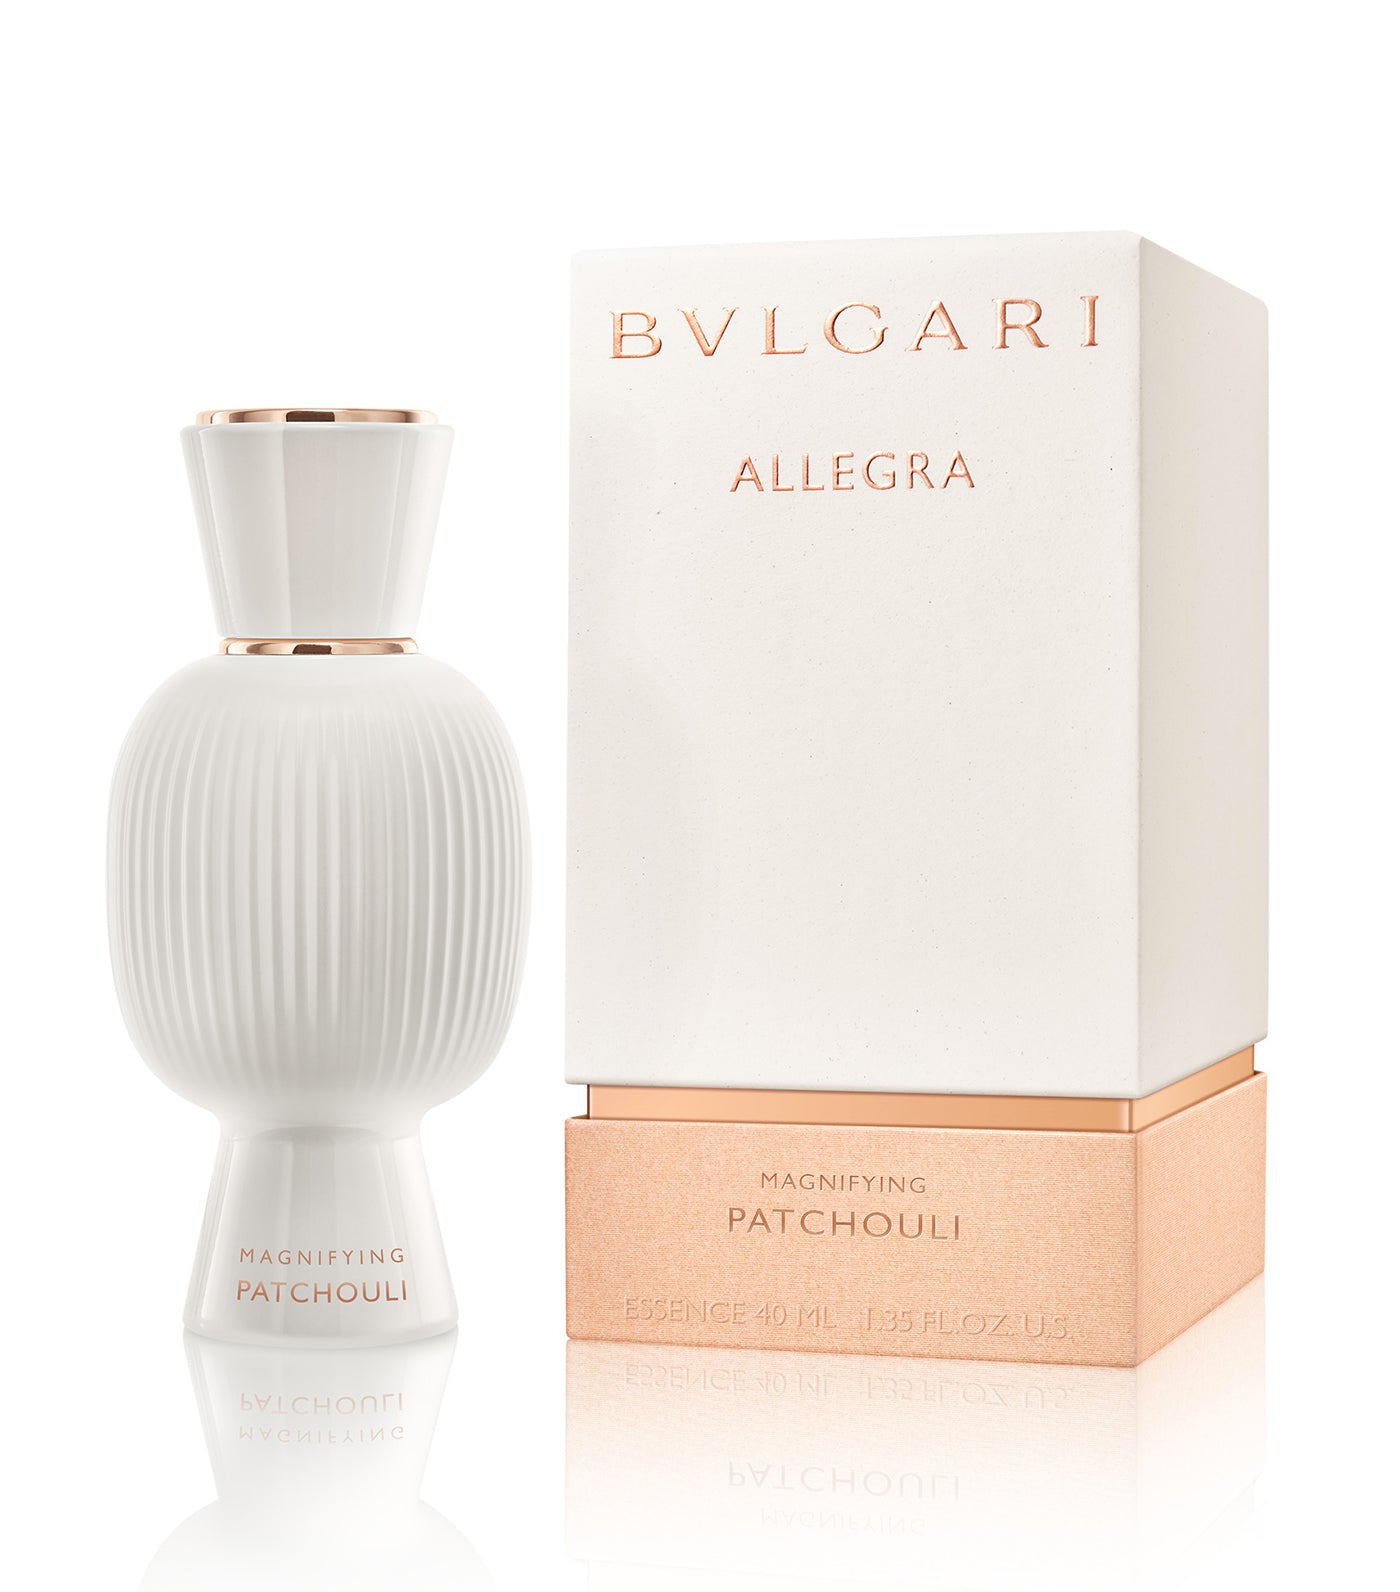 BVLGARI ALLEGRA Magnifying Patchouli Eau De Parfum